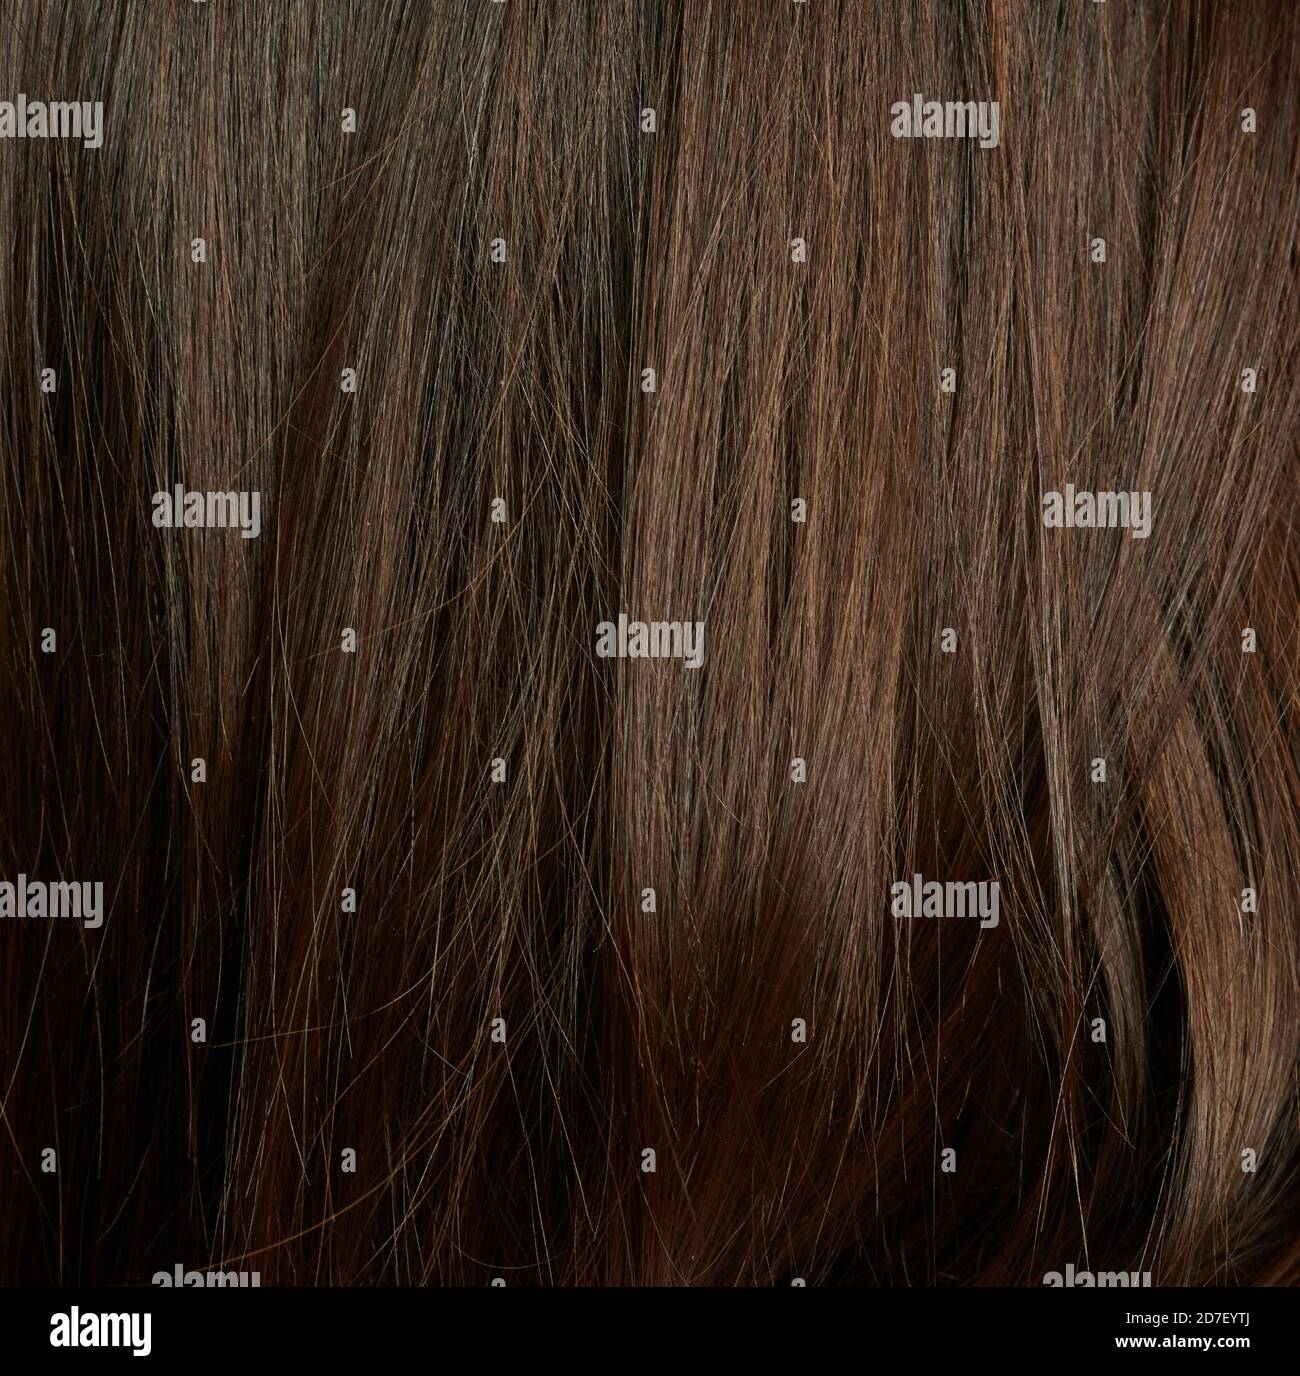 Dark long clean bright hair texture flat background Stock Photo